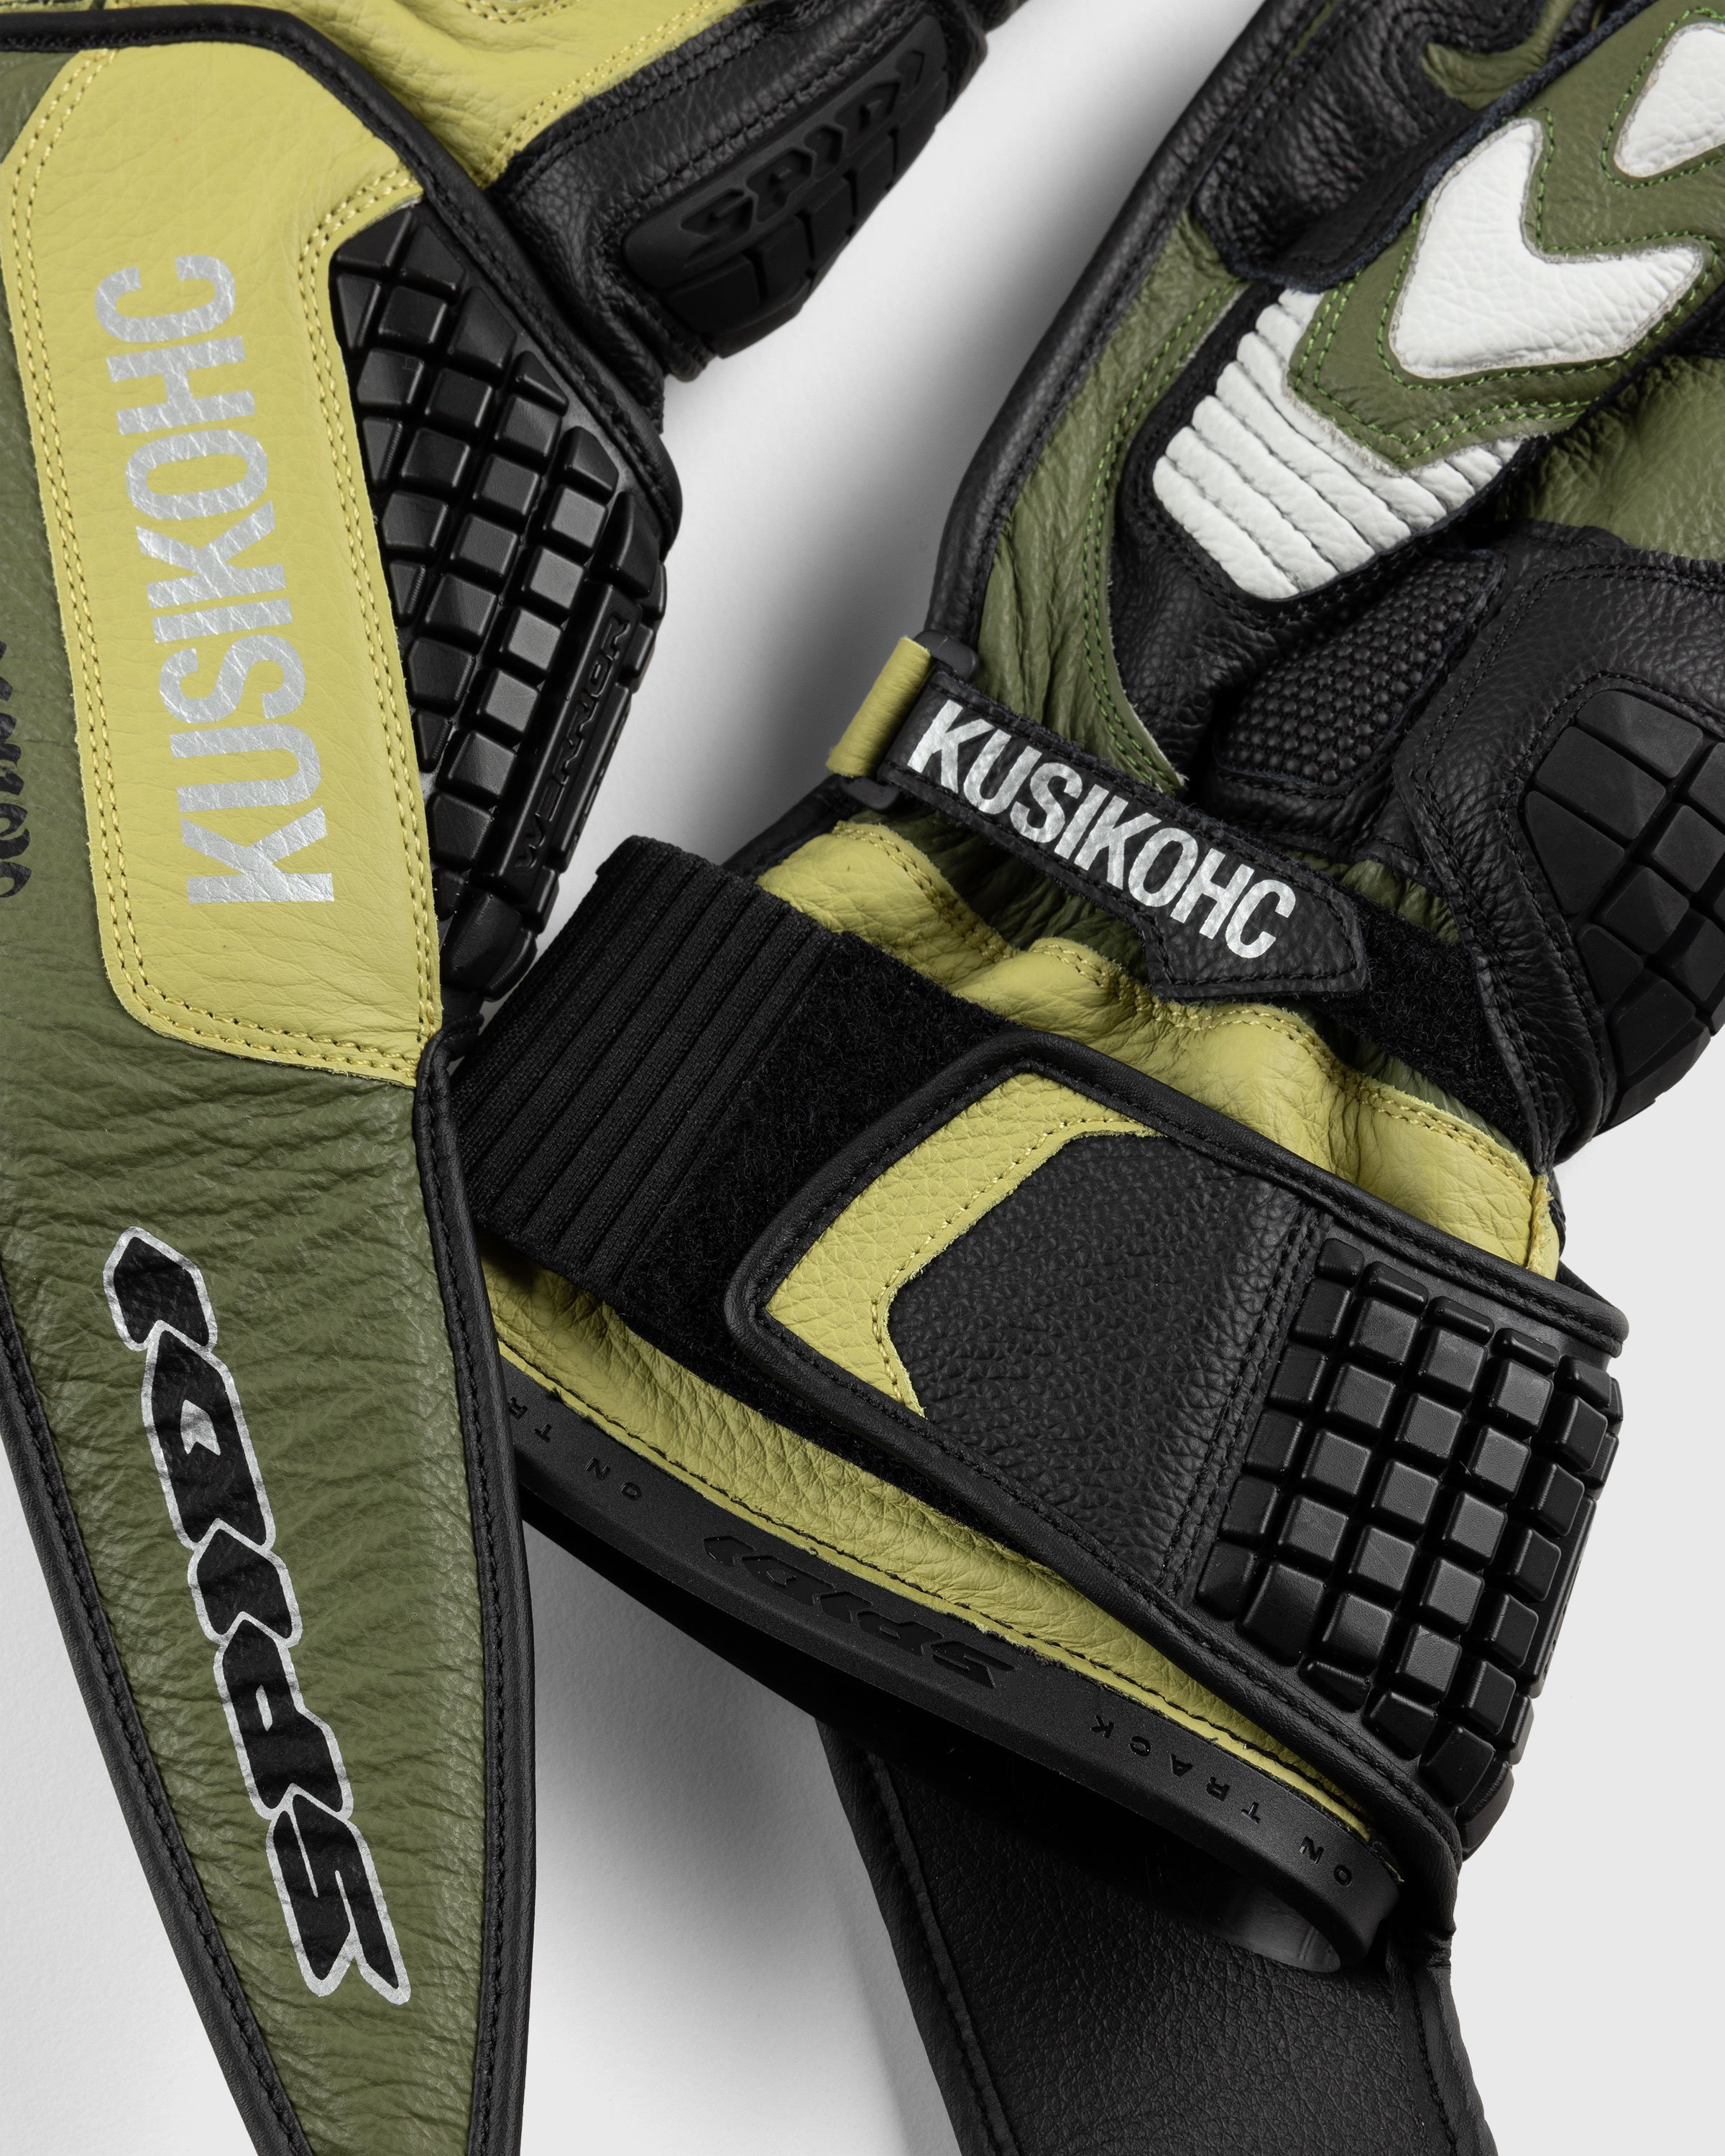 KUSIKOHC - Spidi Gloves Black/Dark Green - Accessories - Multi - Image 5